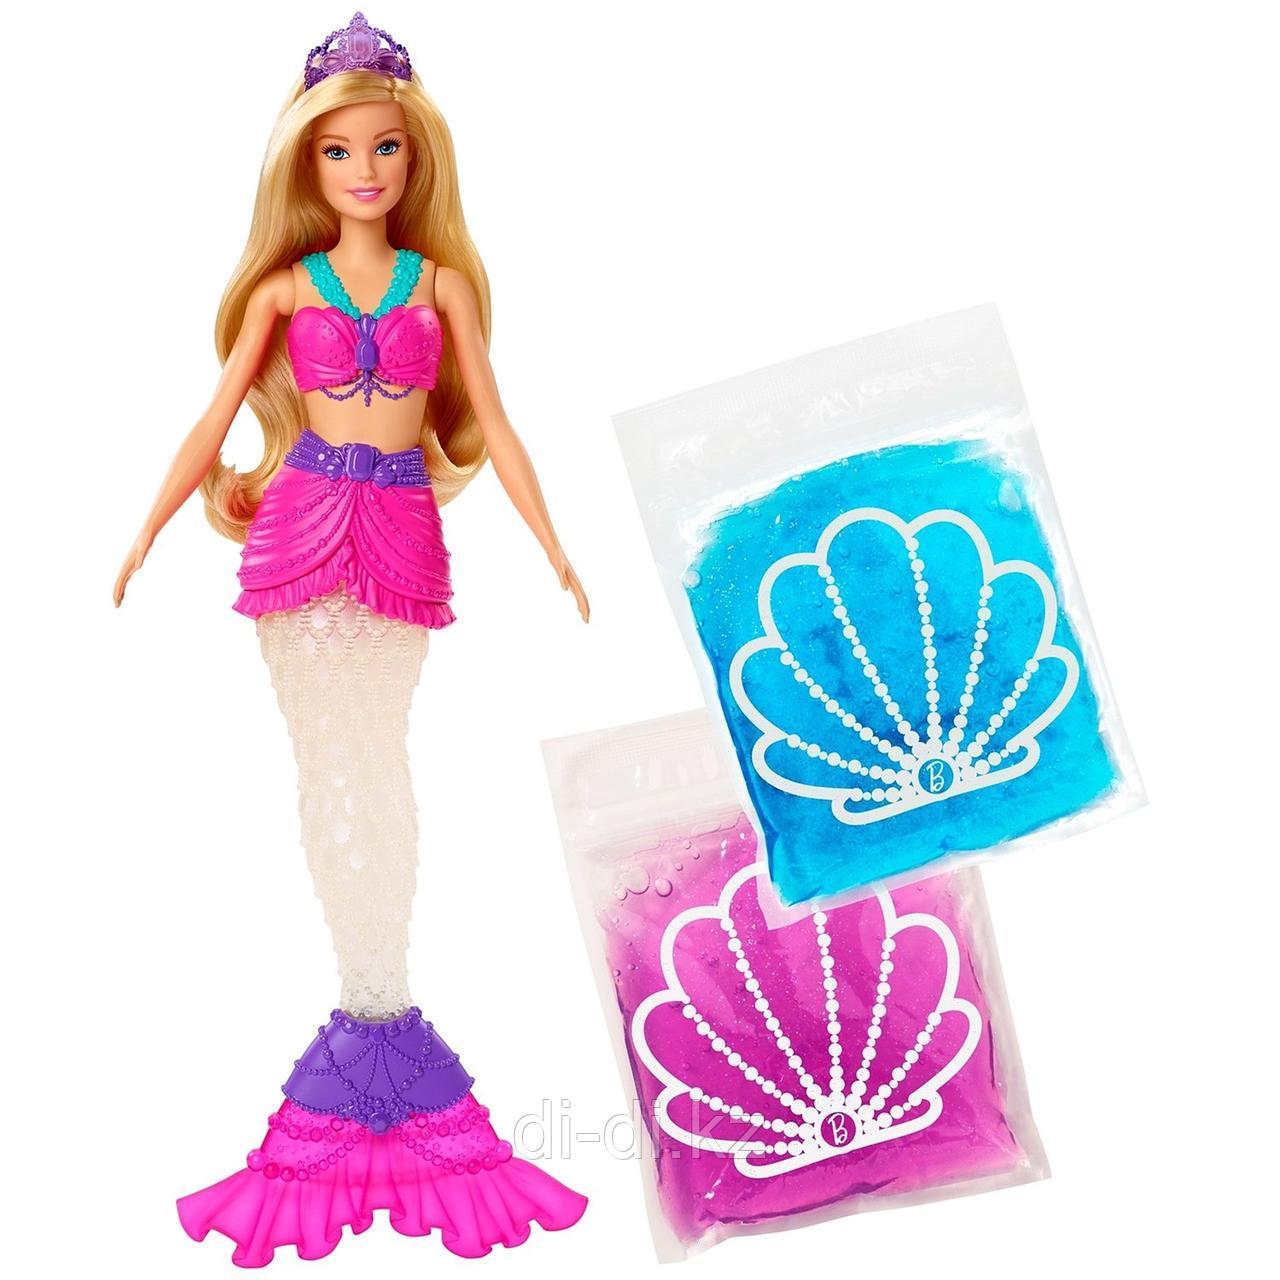 Barbie Кукла-русалочка "Невероятные цвета", фото 1